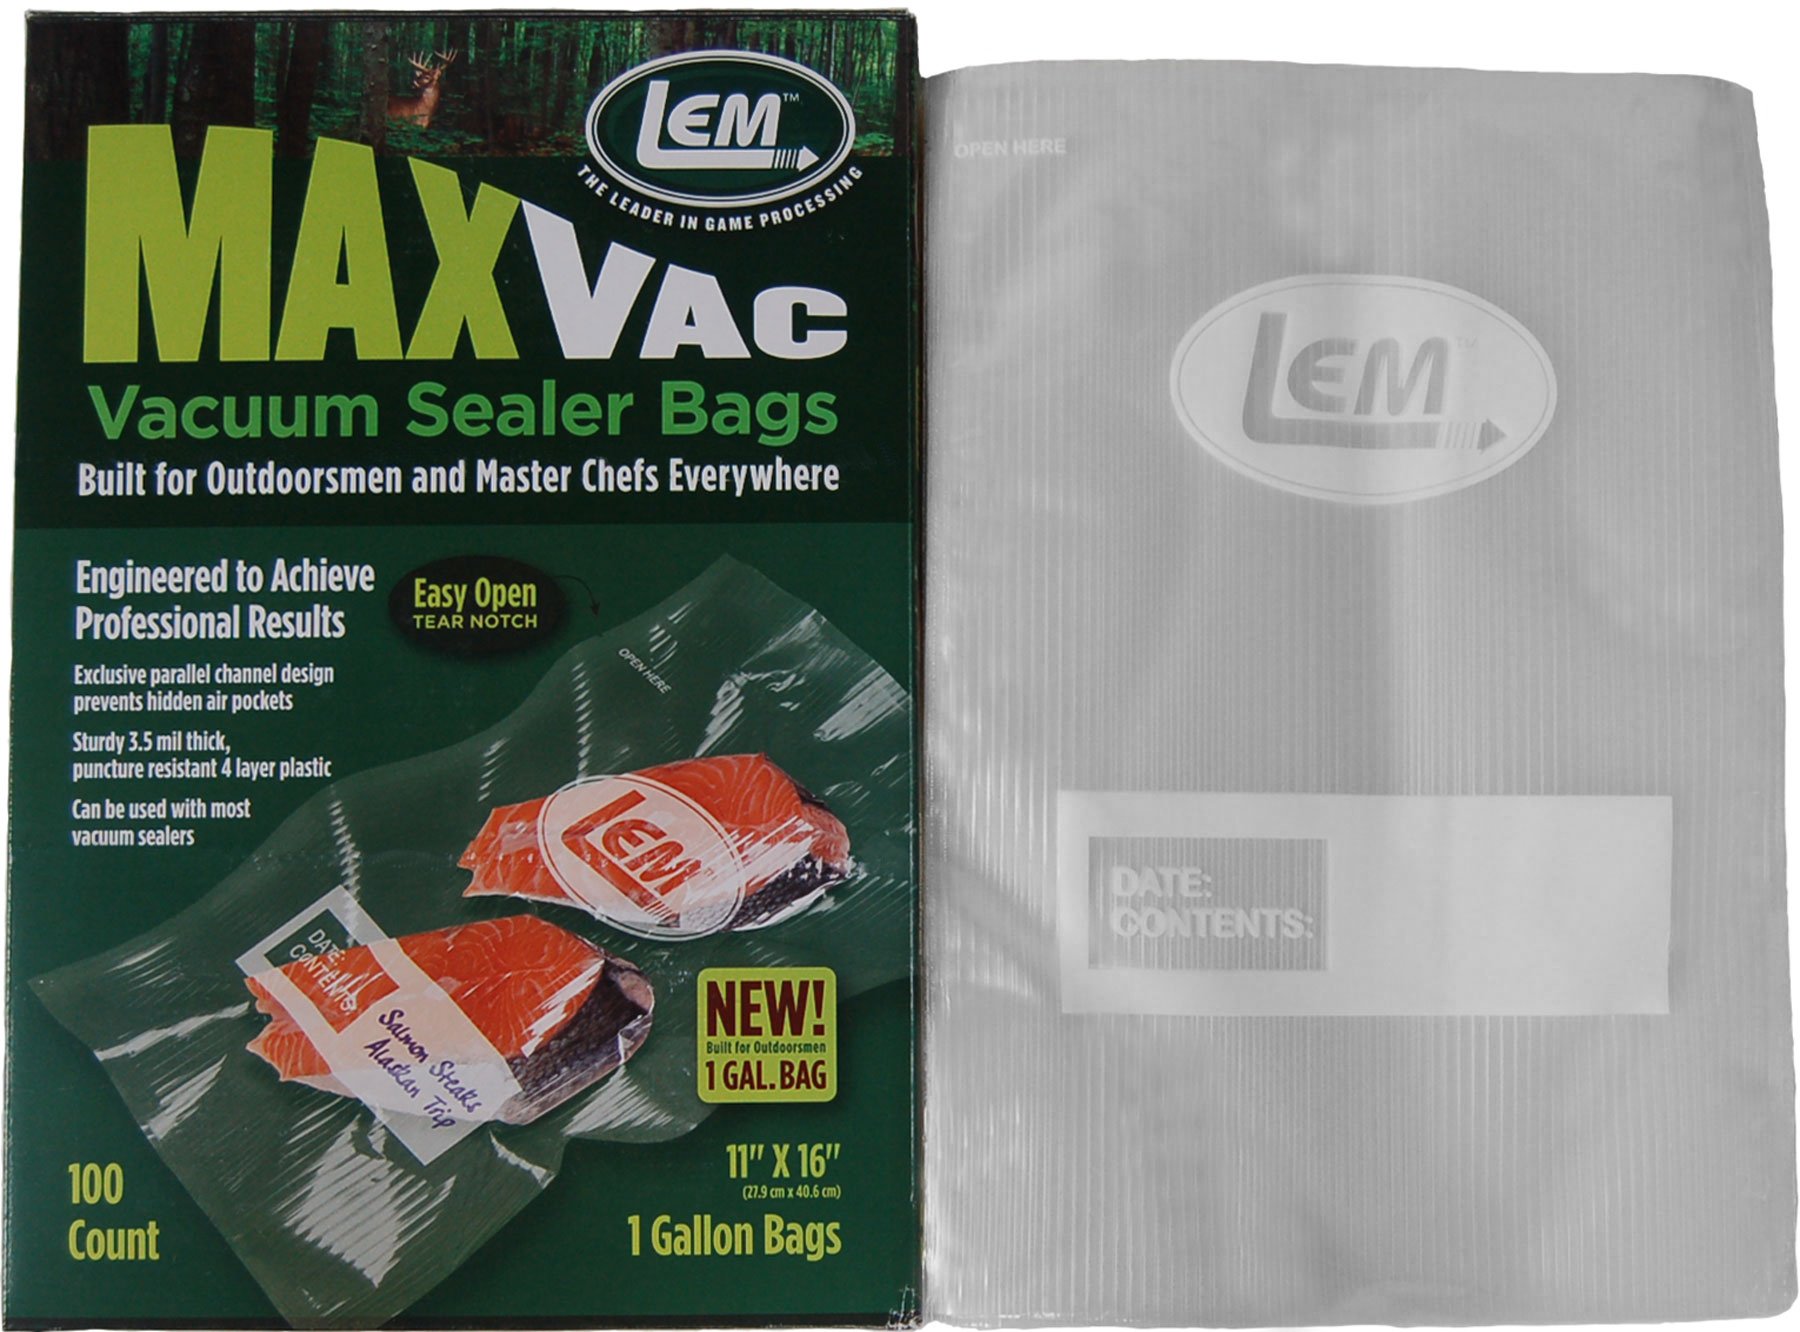 LEM Products 1090 Gallon Bags Vacuum Sealer, 100 Count